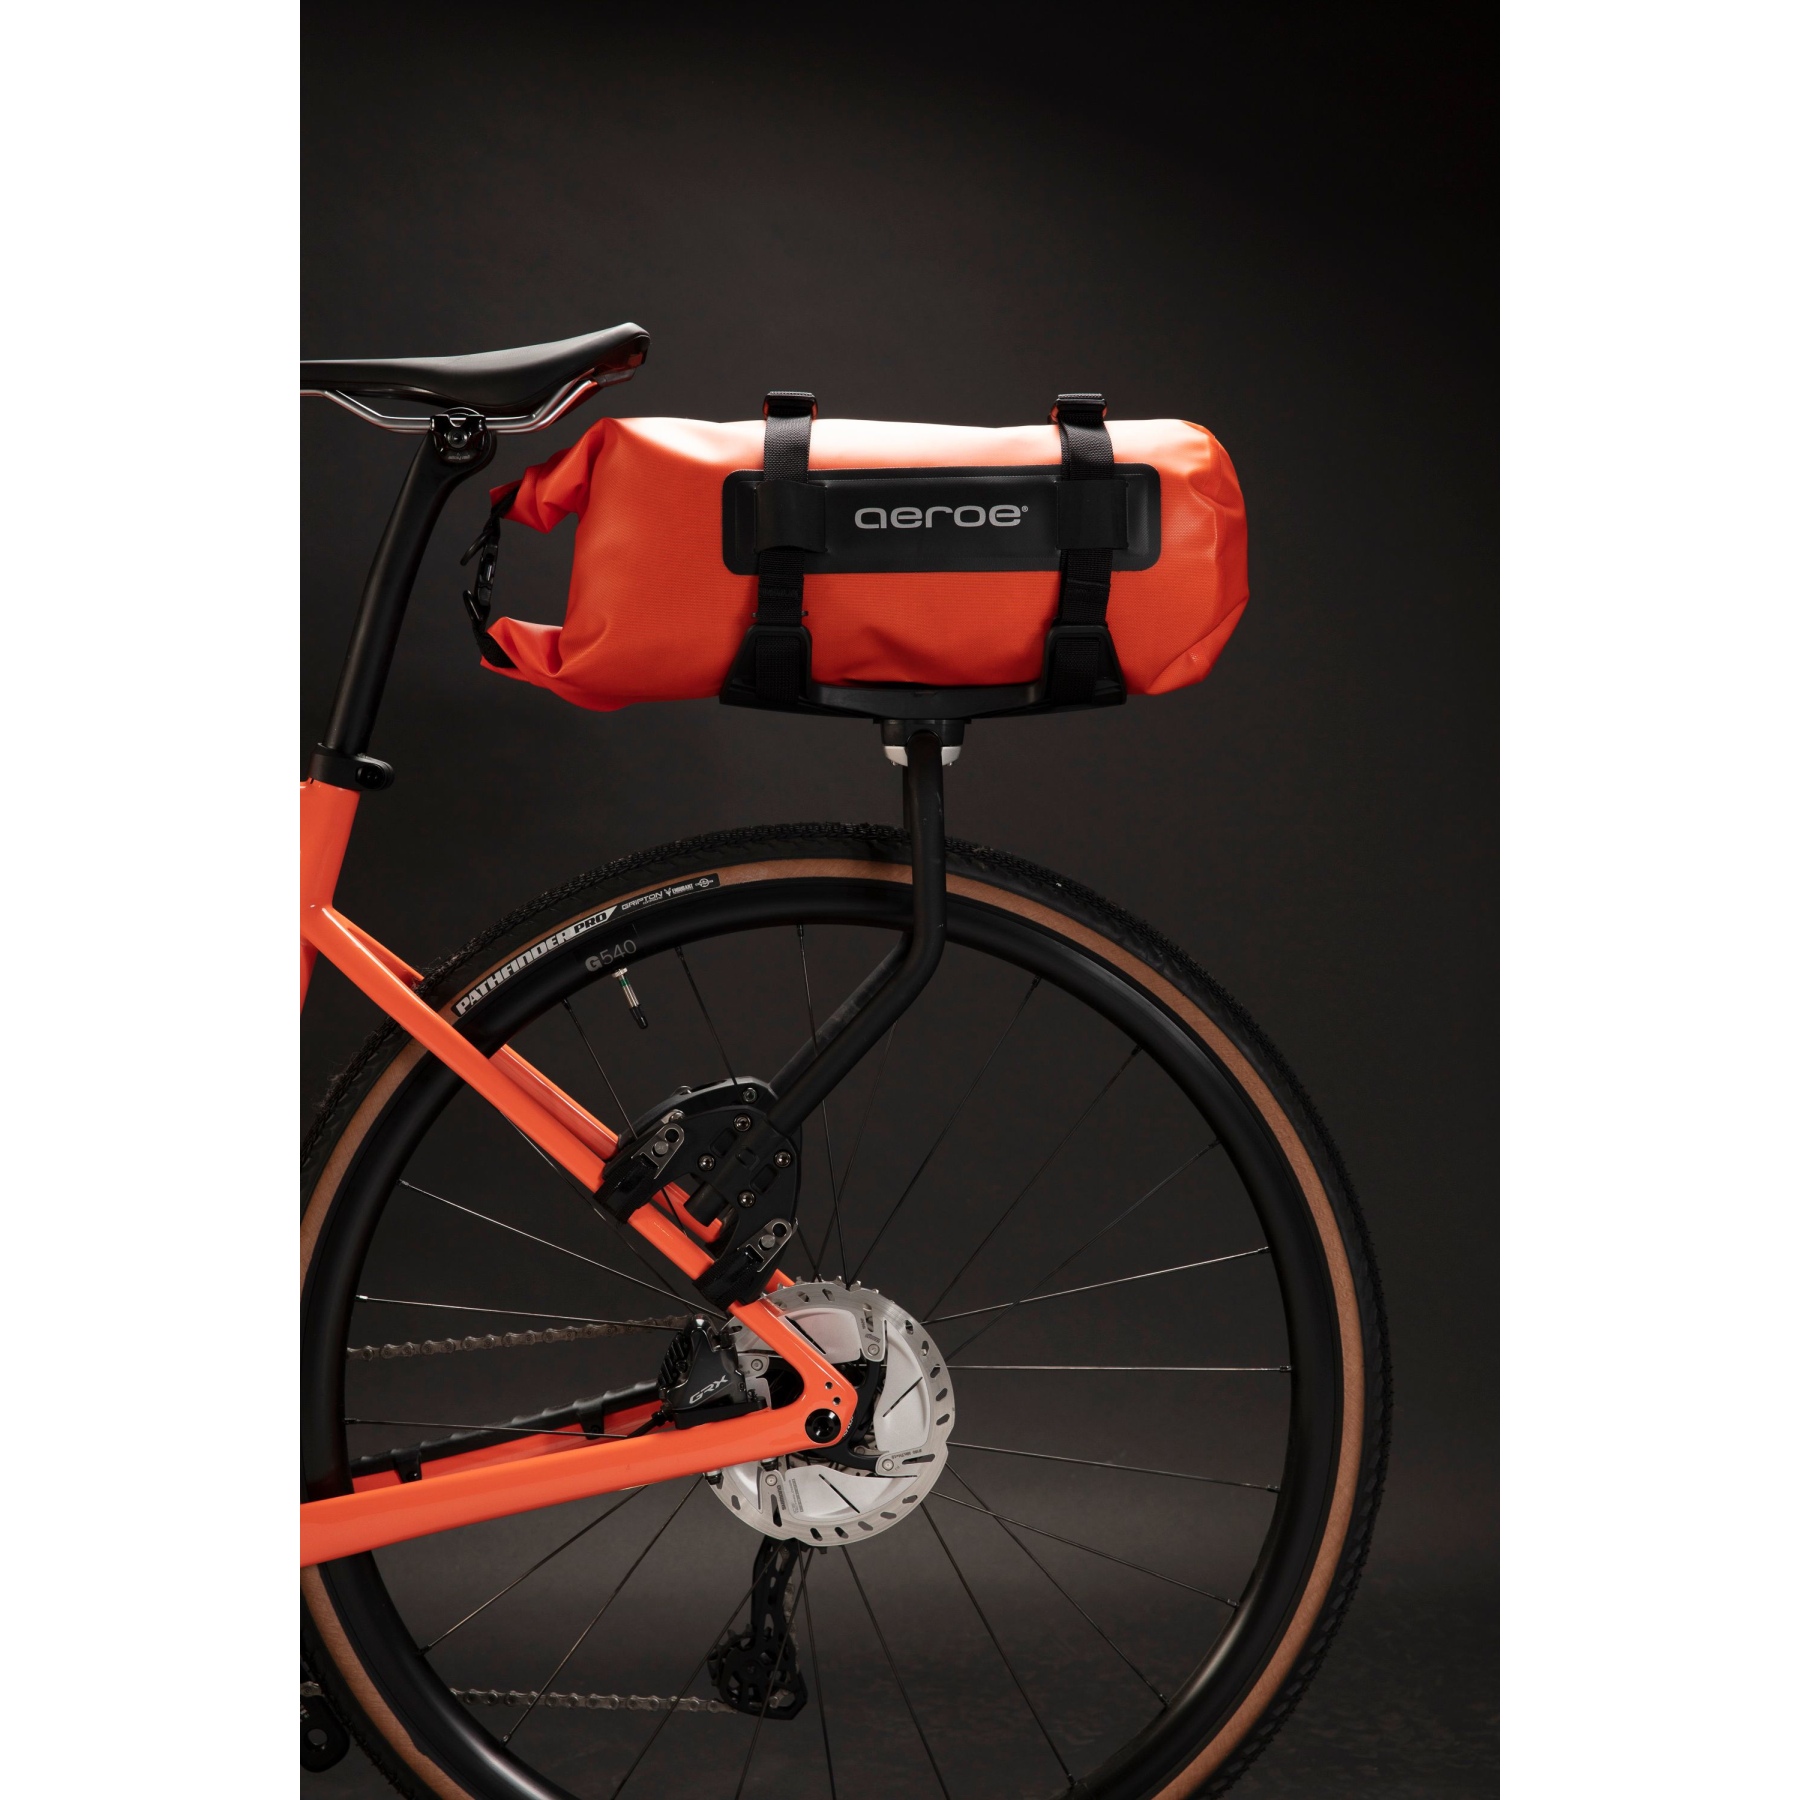 https://images.bike24.com/i/mb/87/7b/06/aeroe-heavy-duty-drybag-8l-orange-14-1183301.jpg